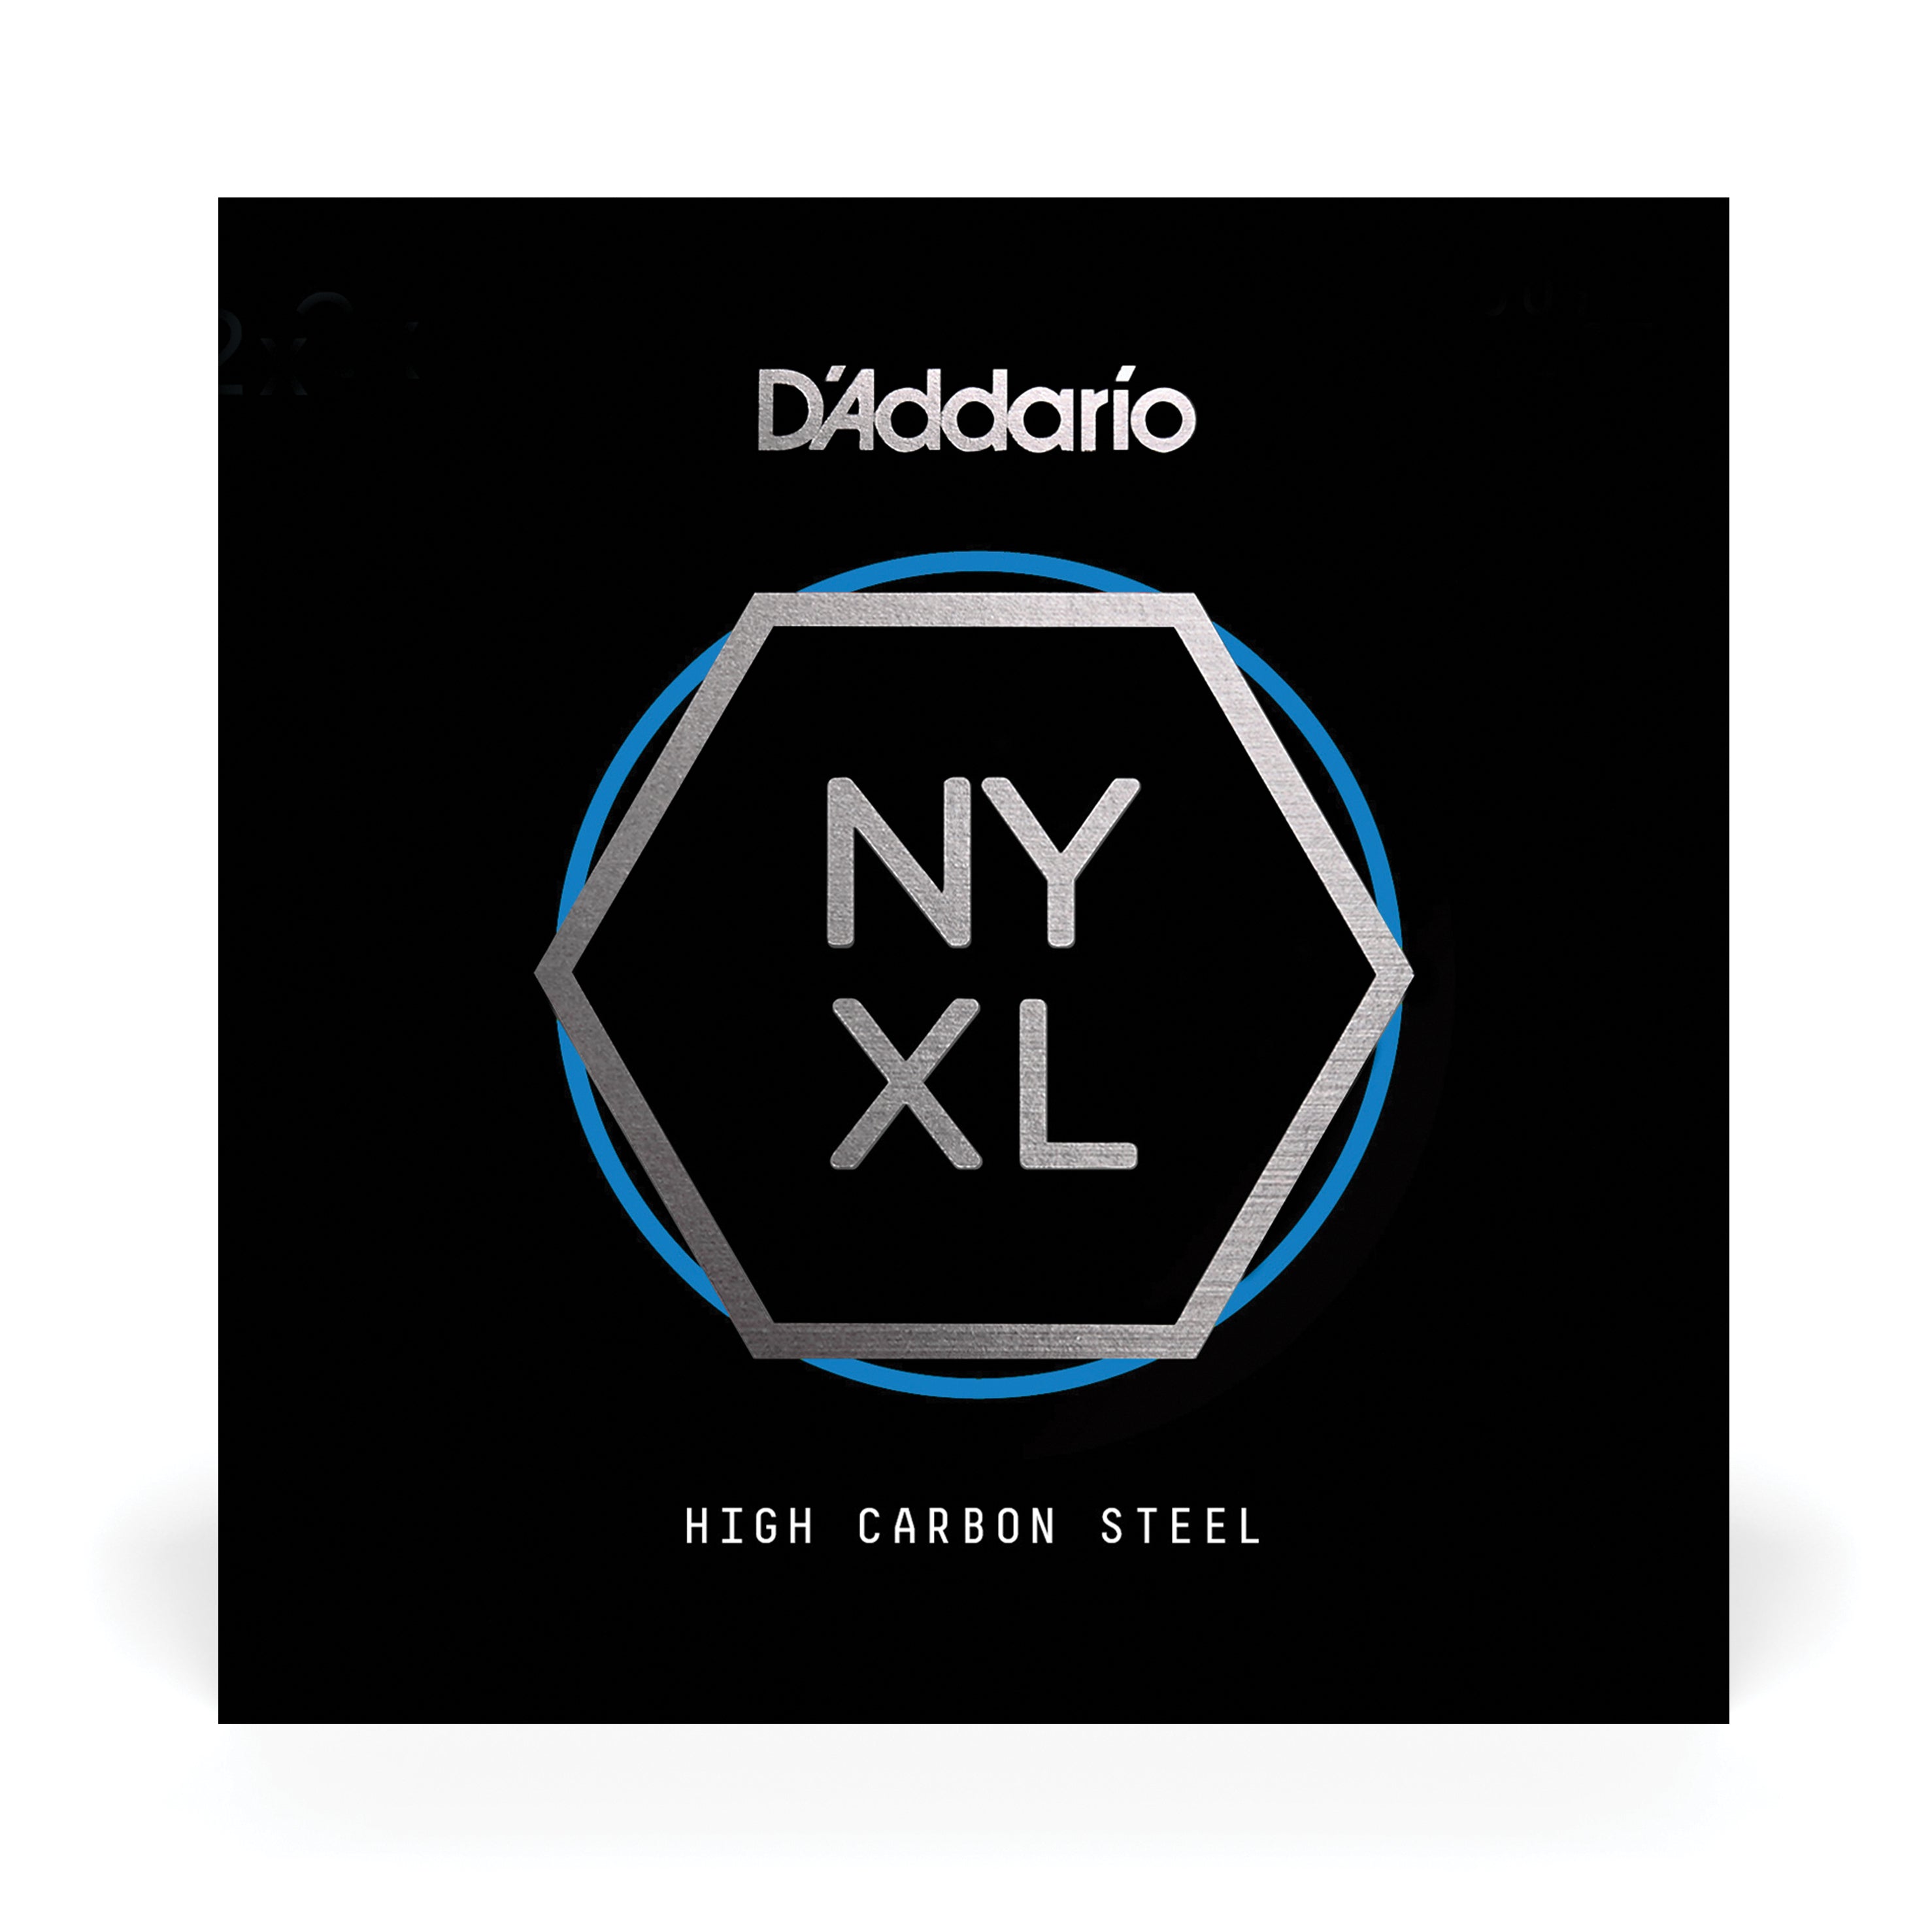 D'Addario NYXL High Carbon Steel .017 Single Guitar String